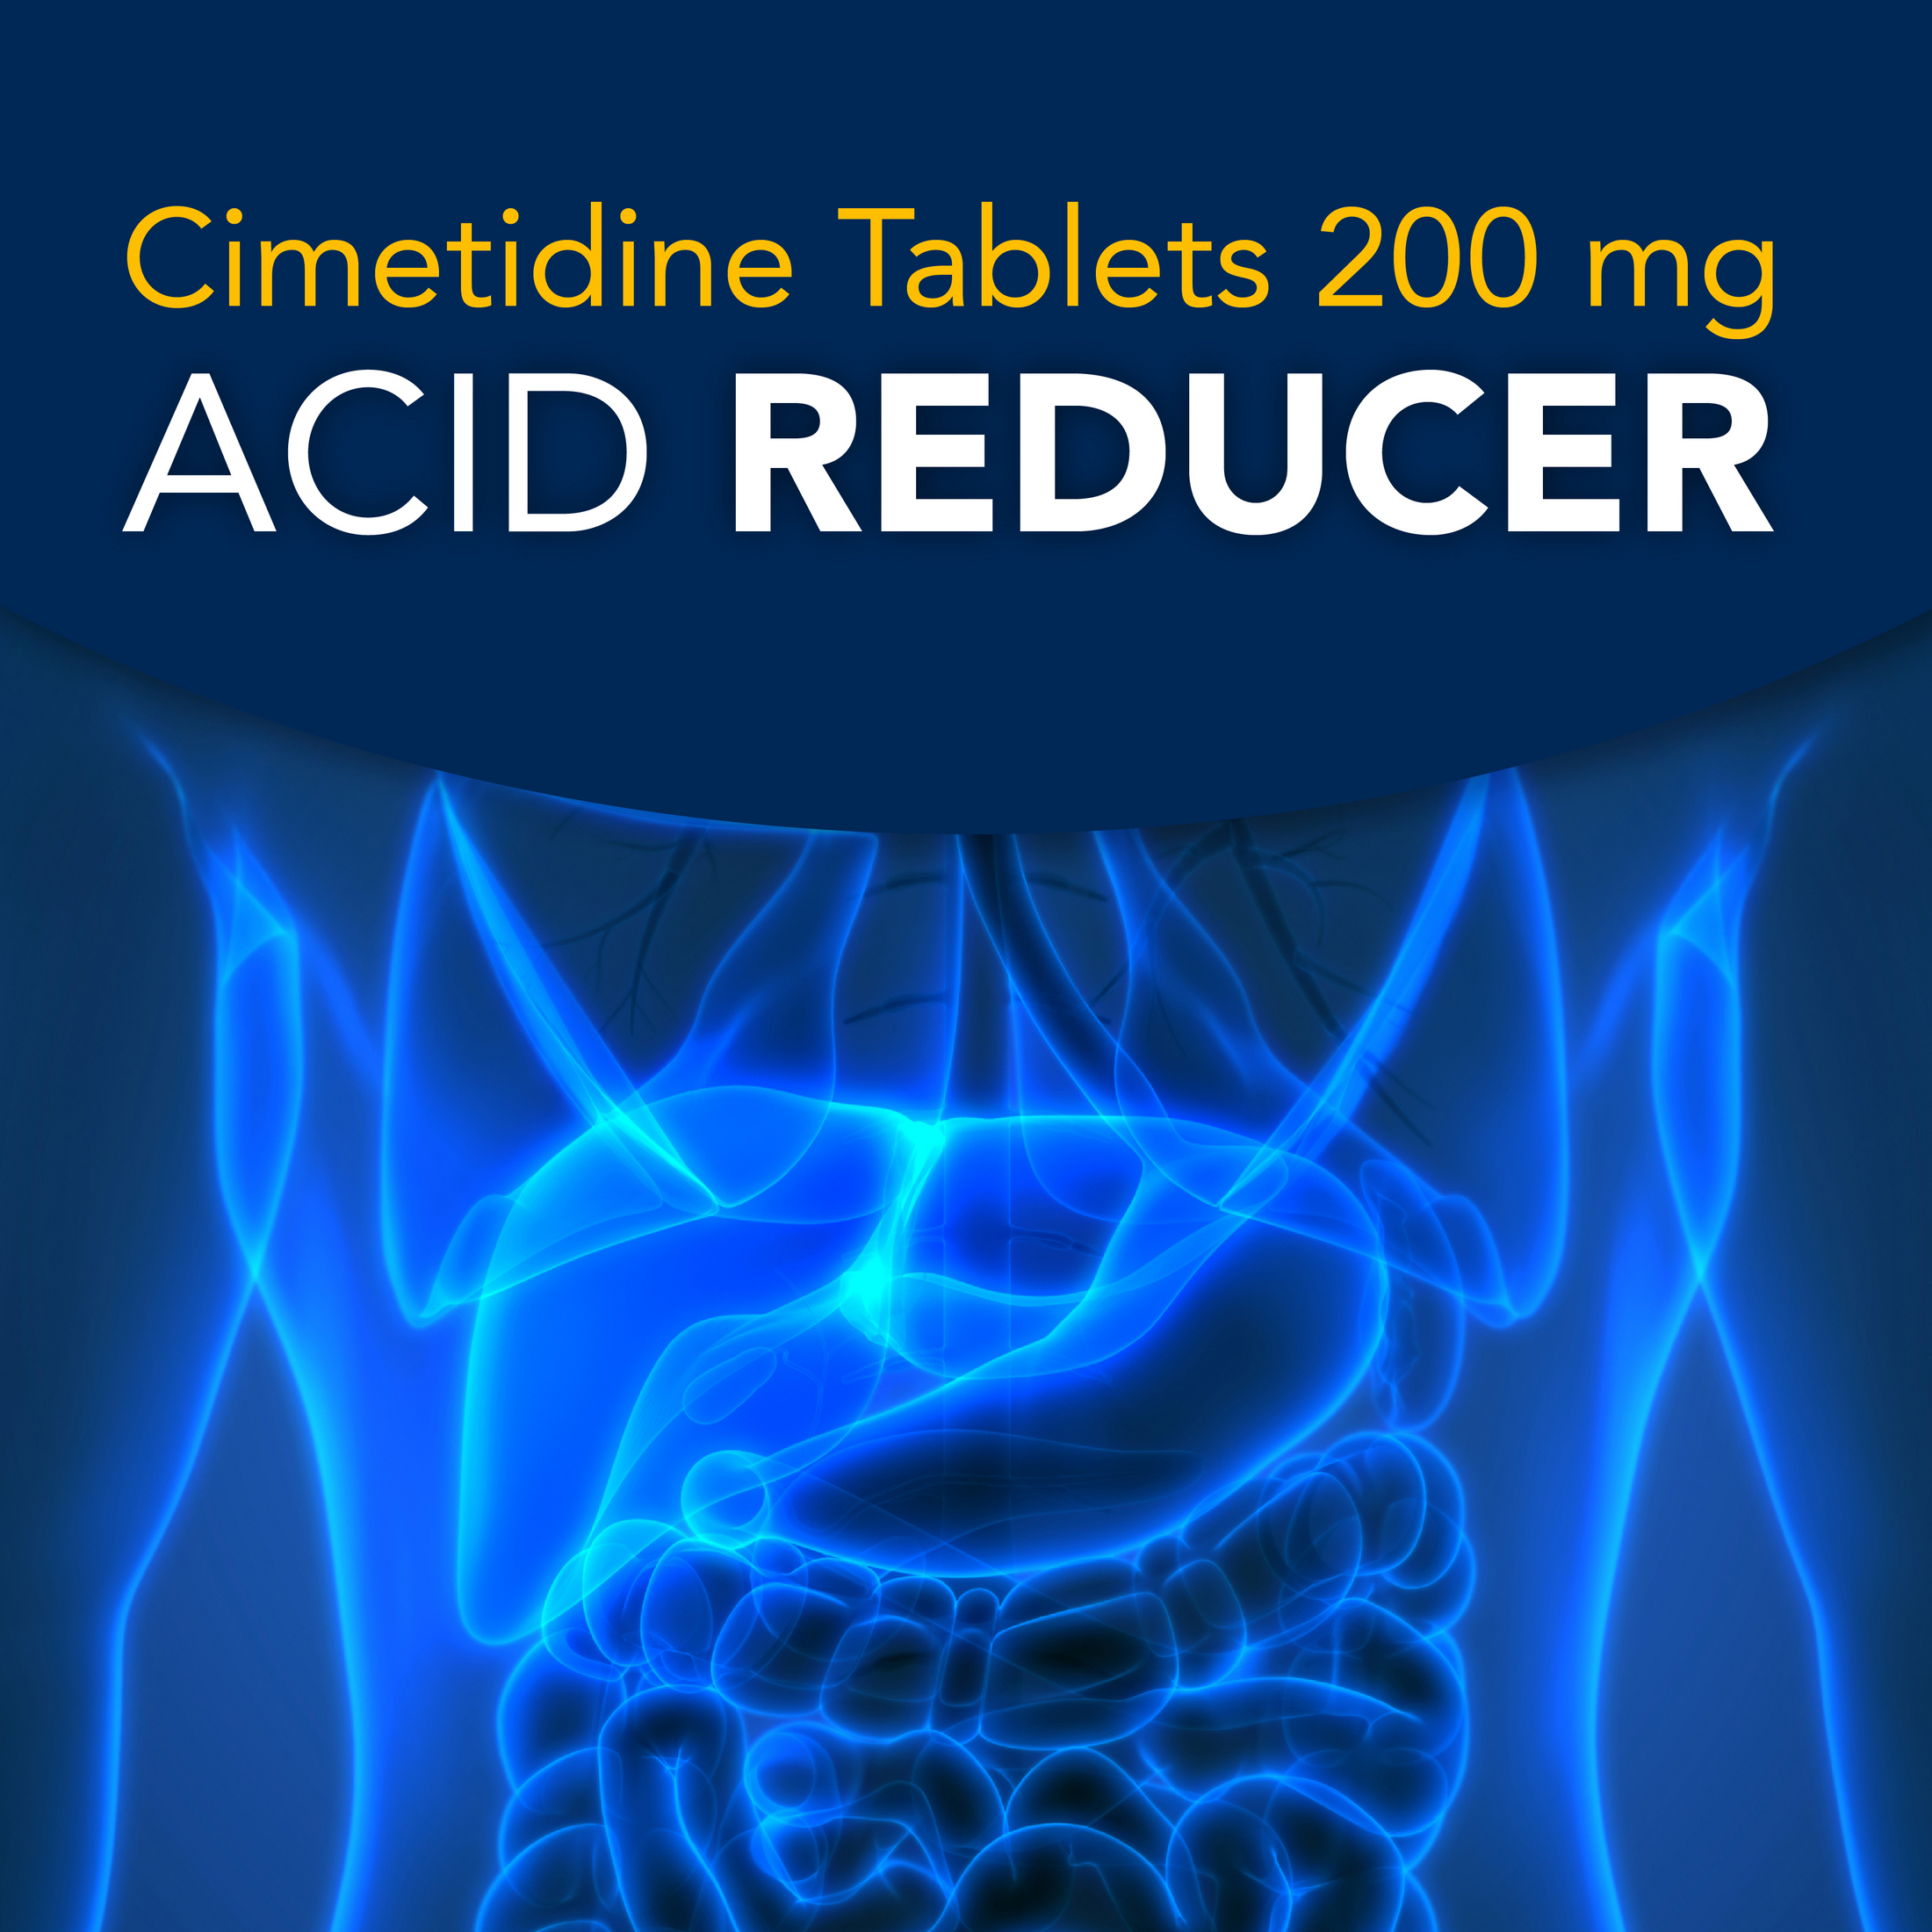 Equate Cimetidine Tablets 200 mg, Acid Reducer,60 Count - image 5 of 8